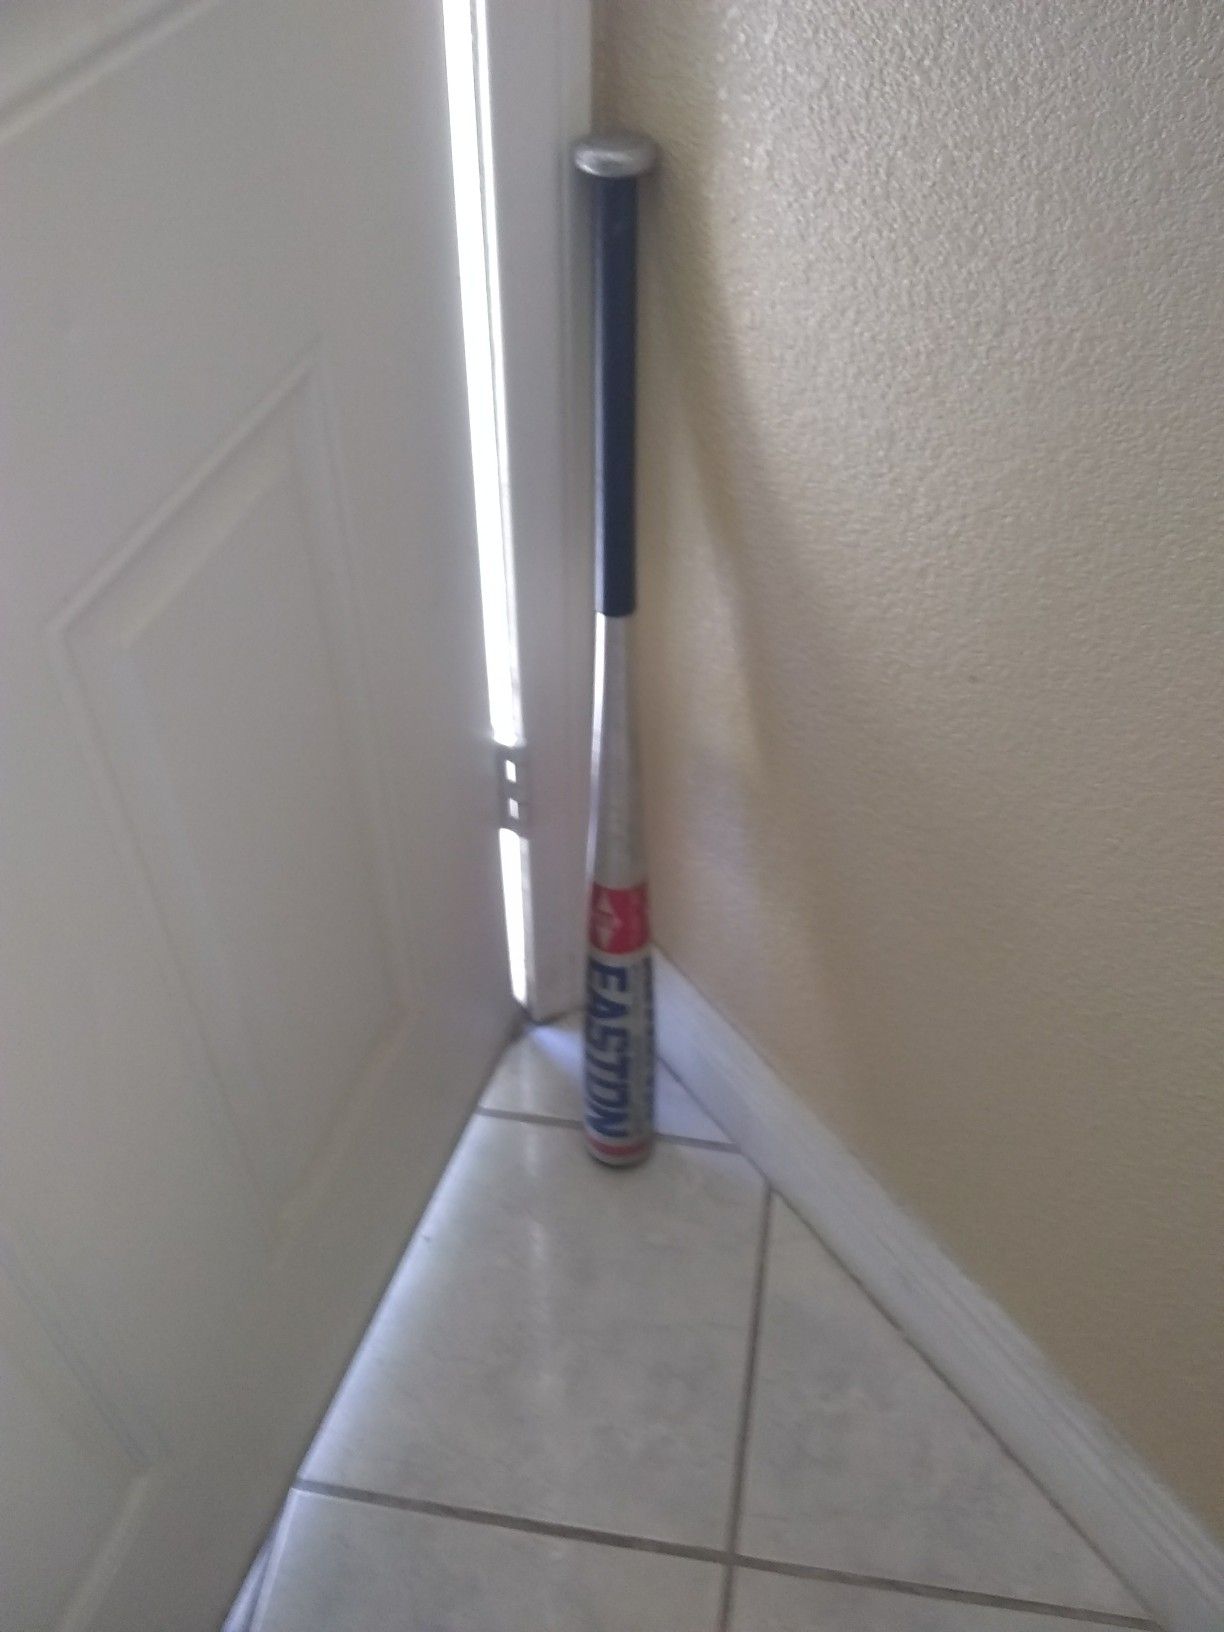 Easton Magnum baseball bat